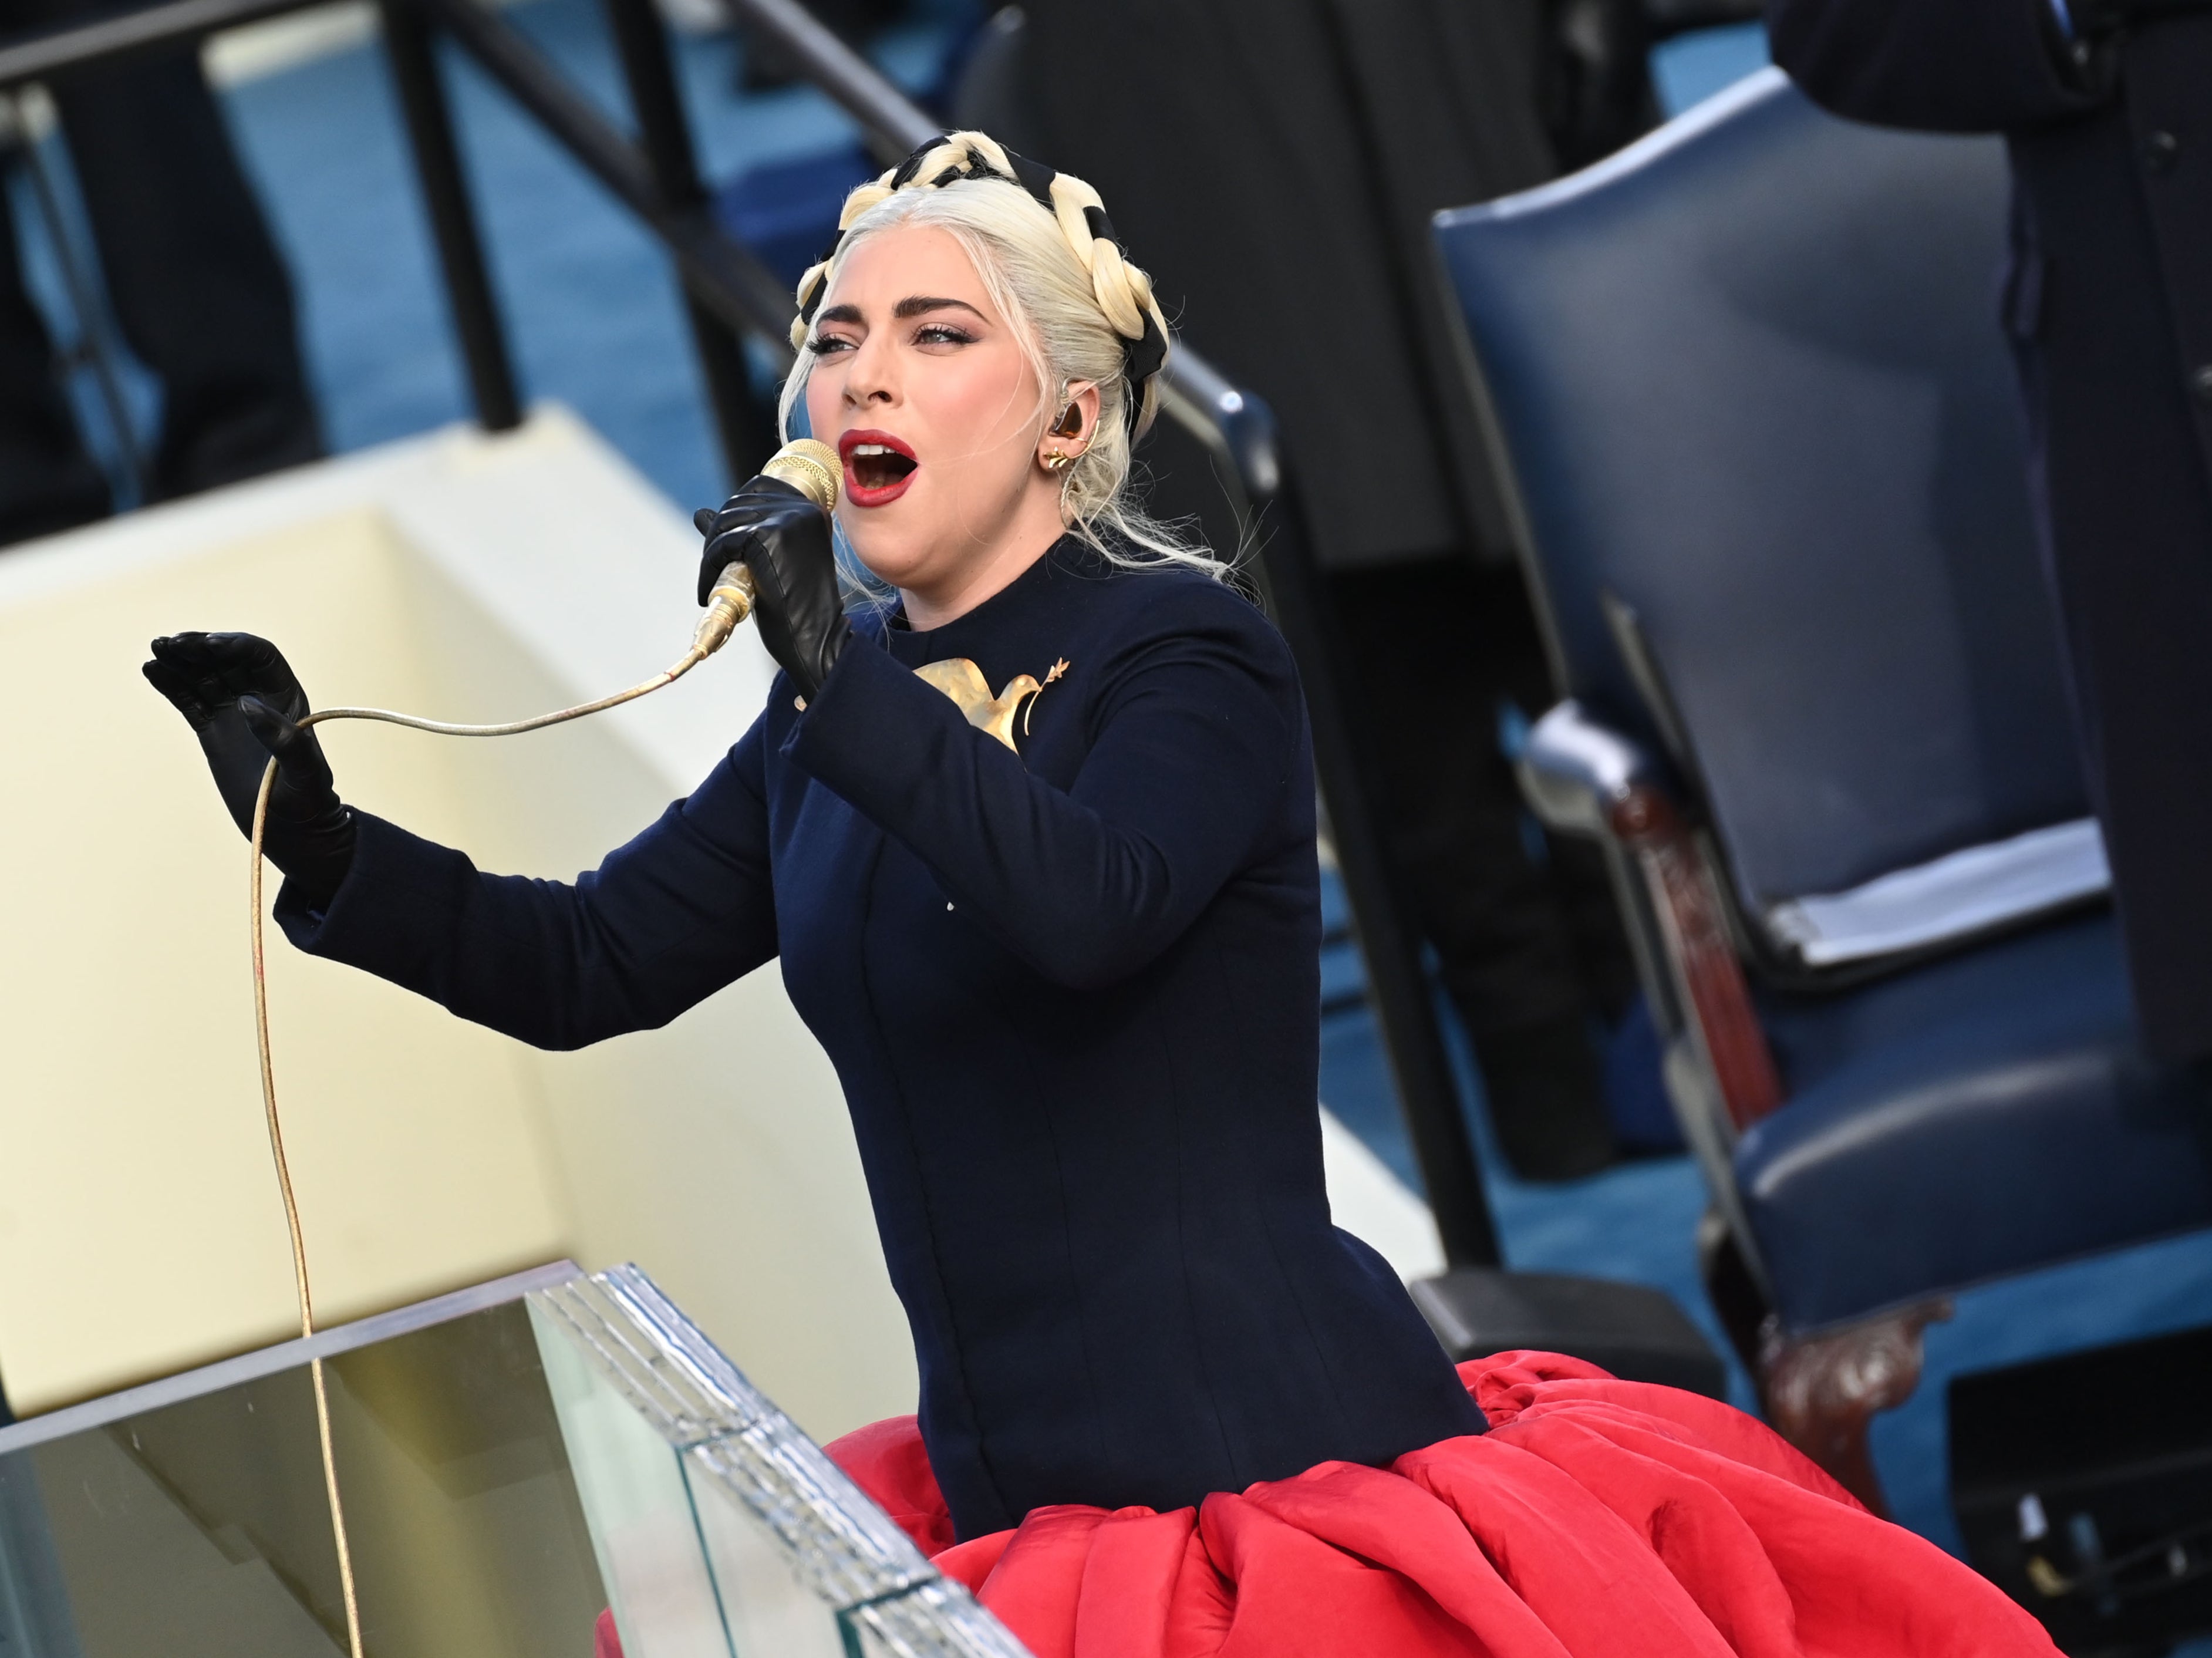 Lady Gaga sings the US national anthem at Joe Biden’s inauguration on 20 January 2021 in Washington, DC